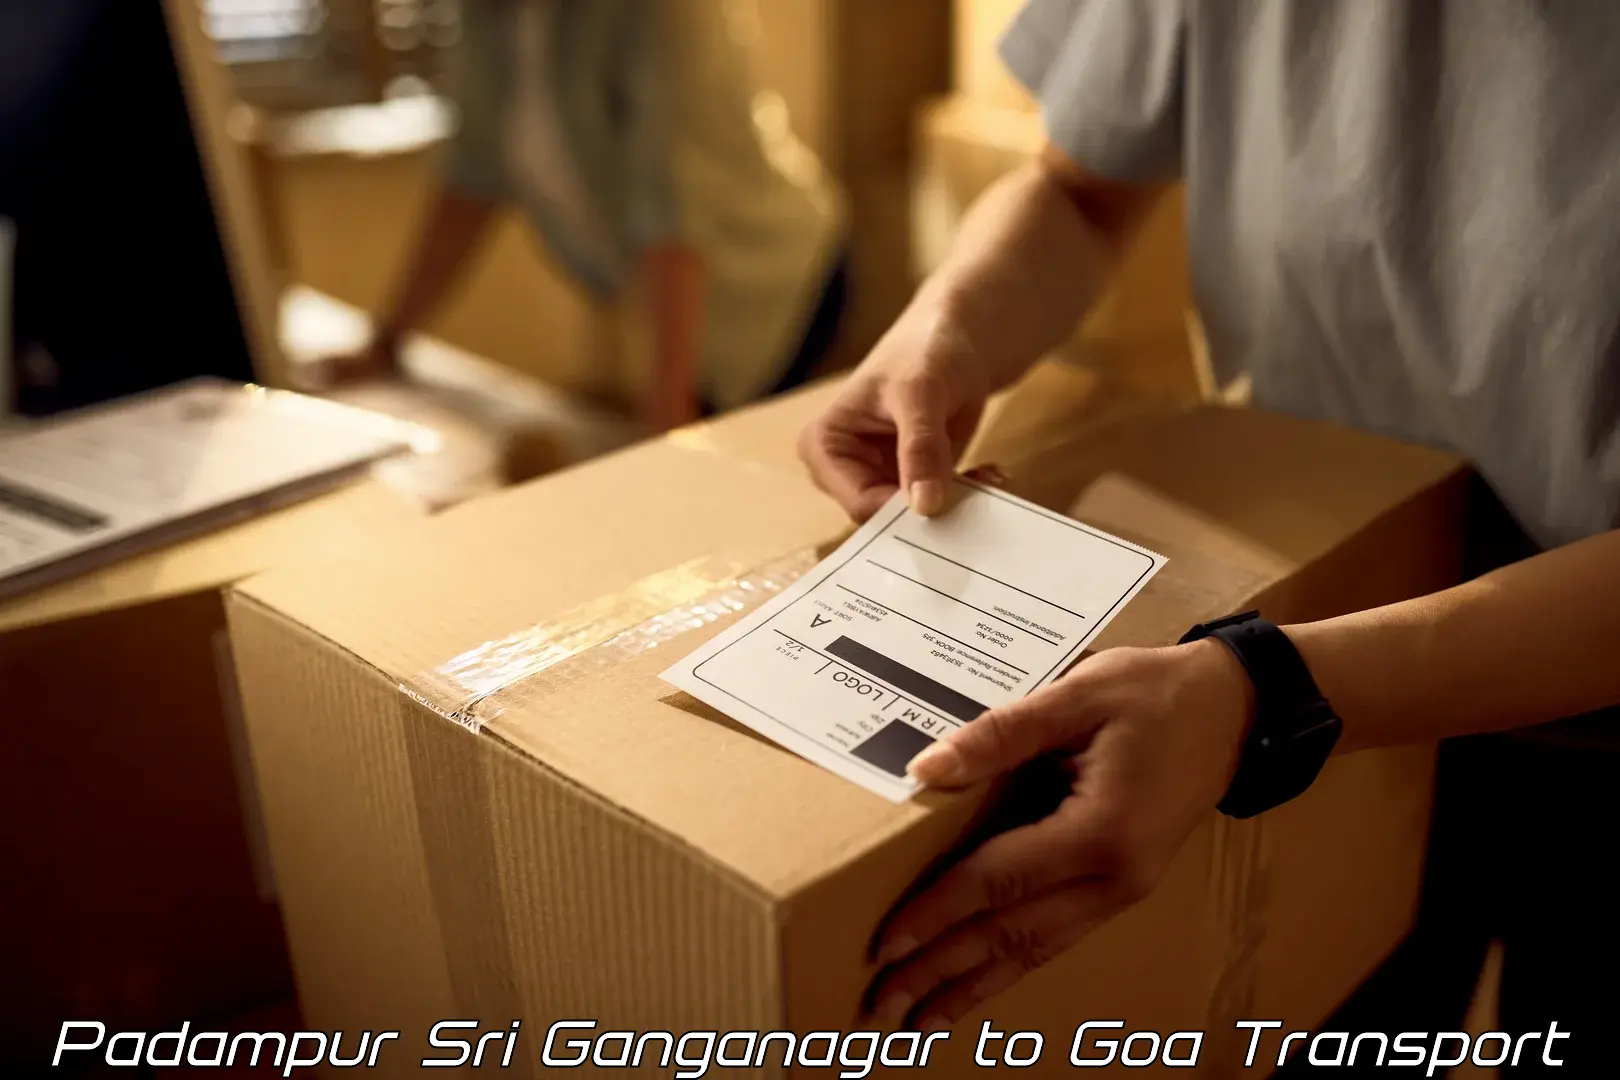 India truck logistics services Padampur Sri Ganganagar to Goa